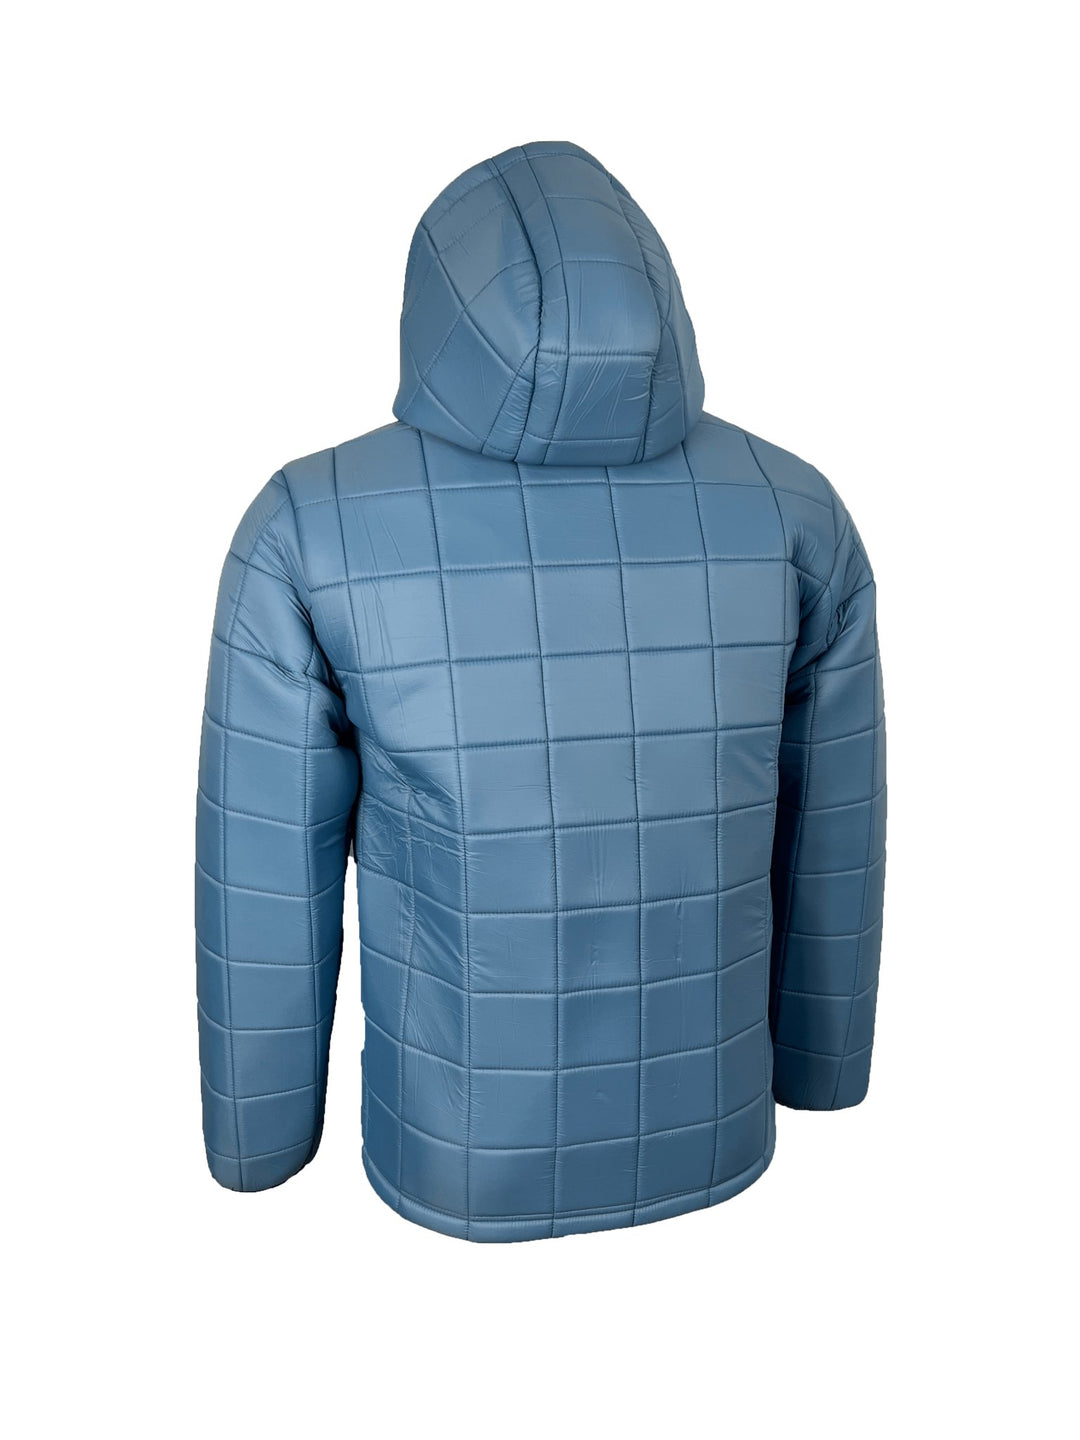 Glacier Jacket - Fortress Clothing